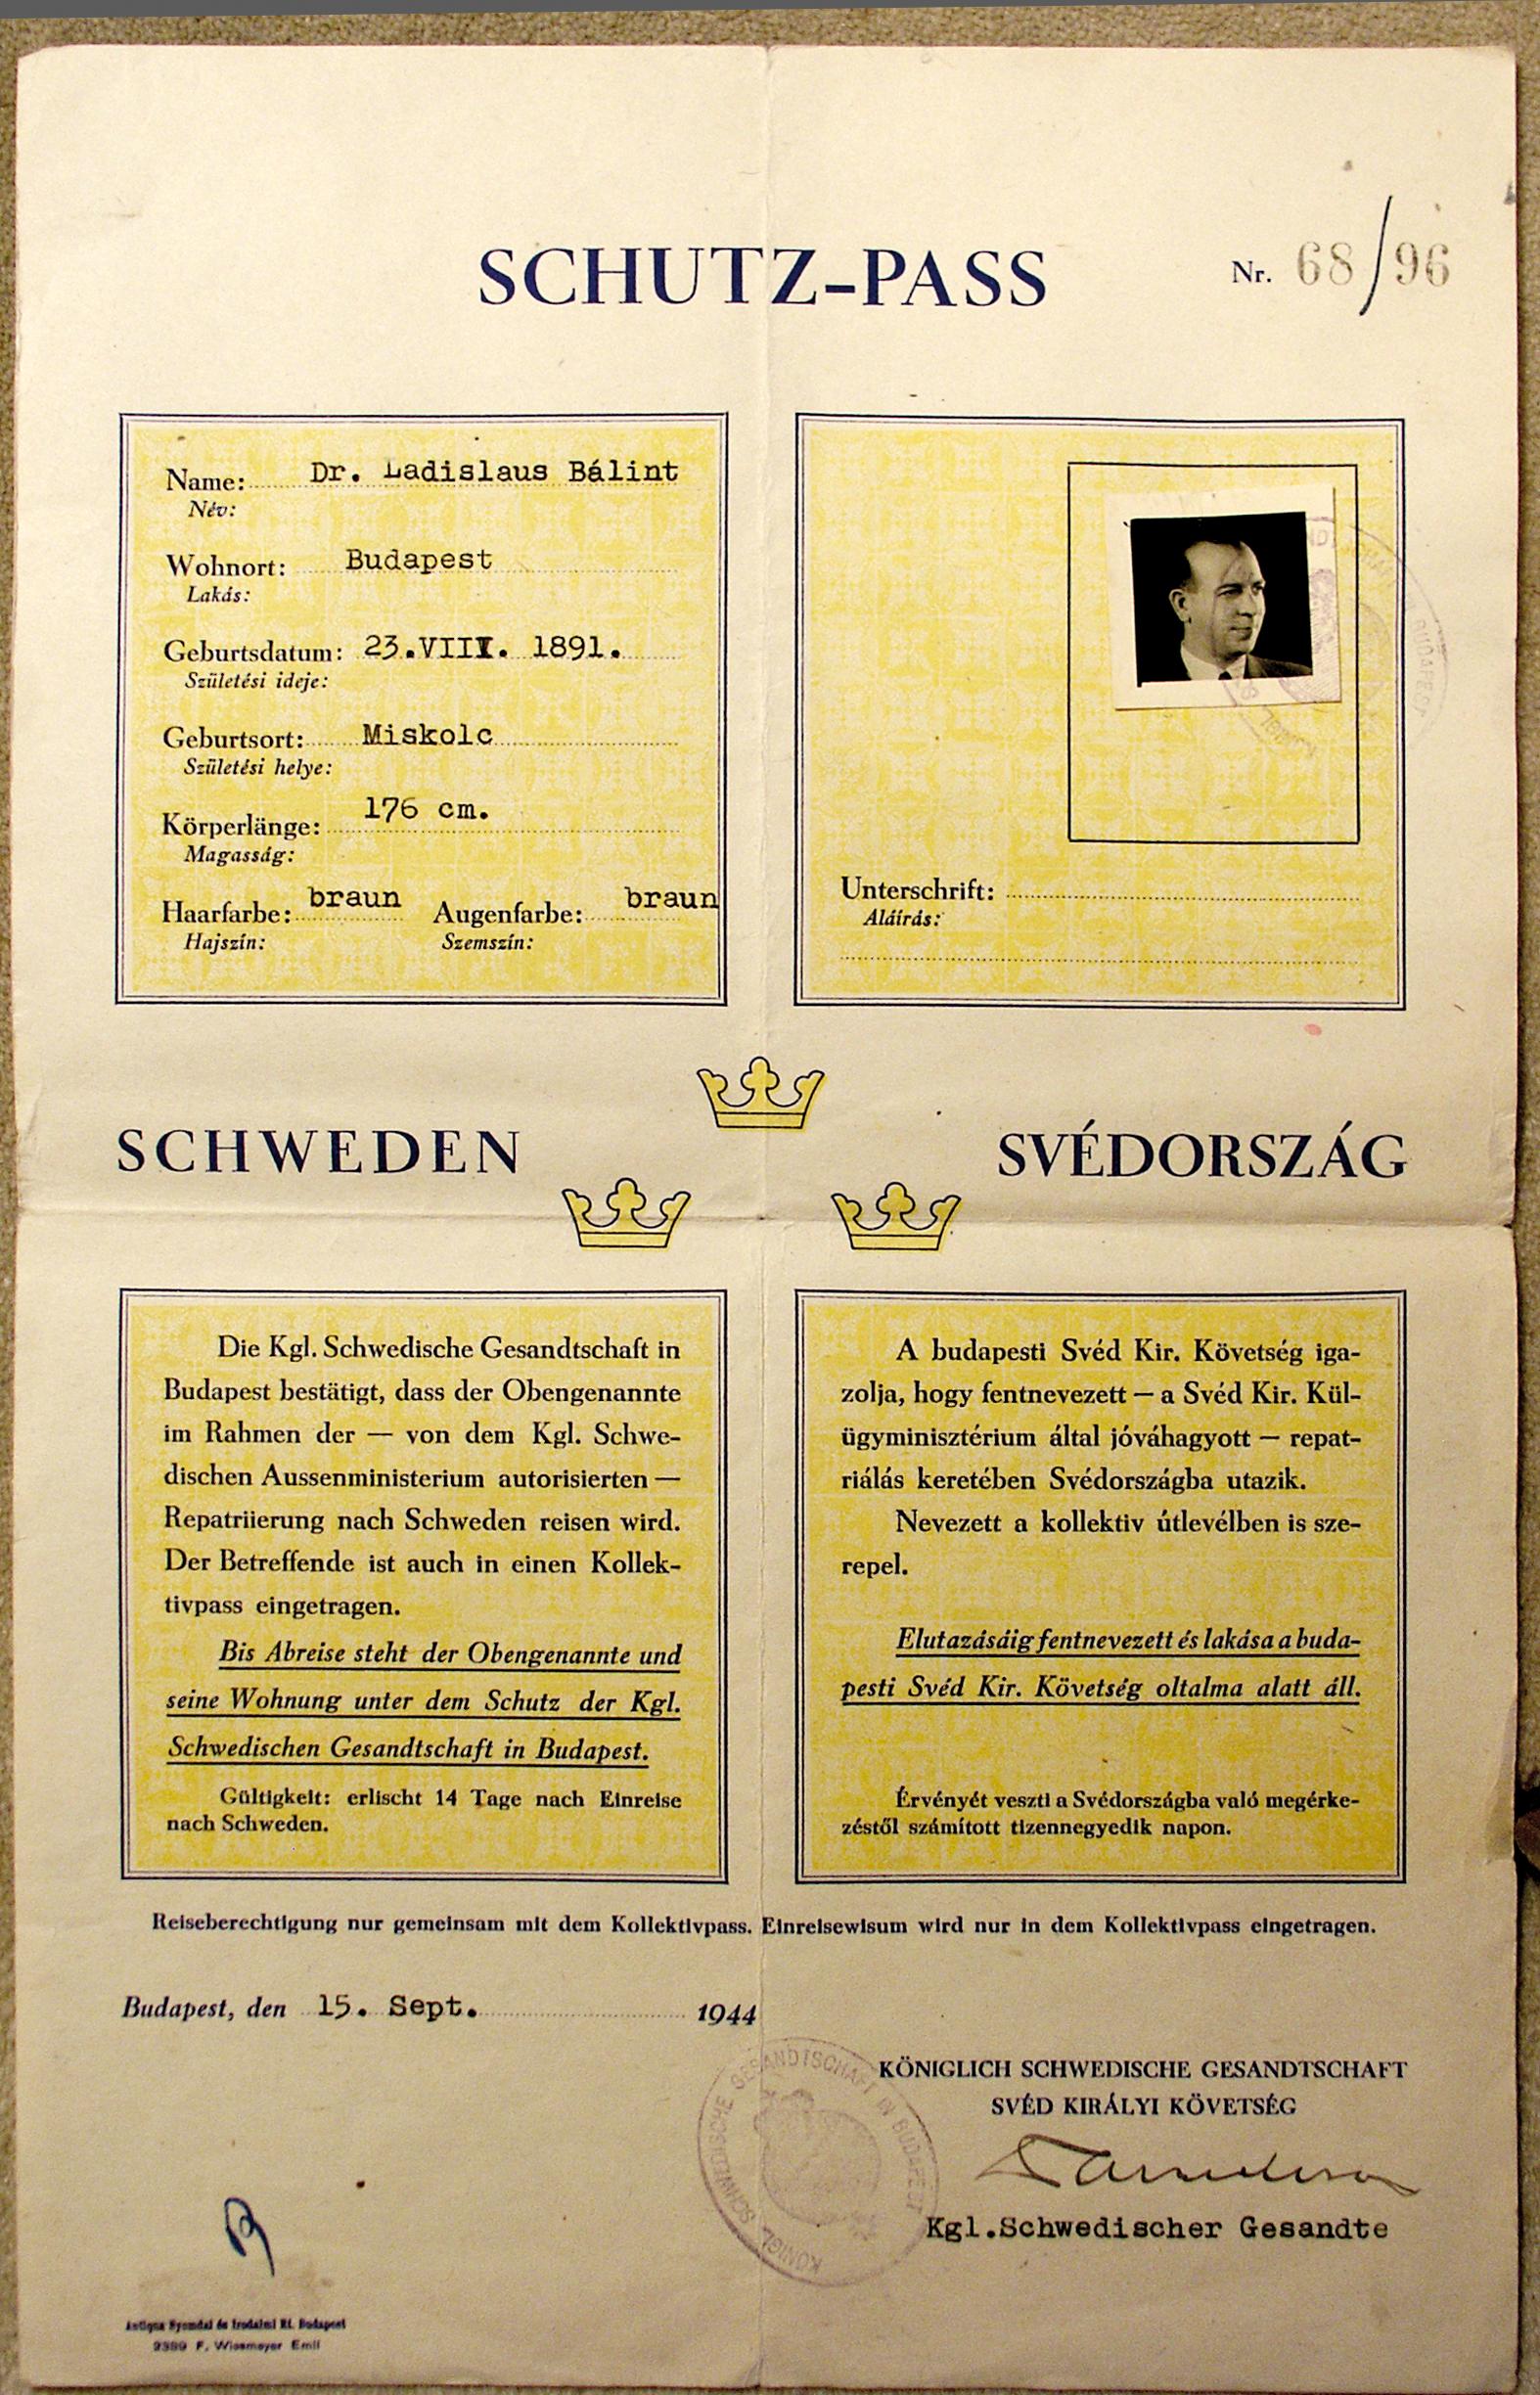 A Swedish protective passport.